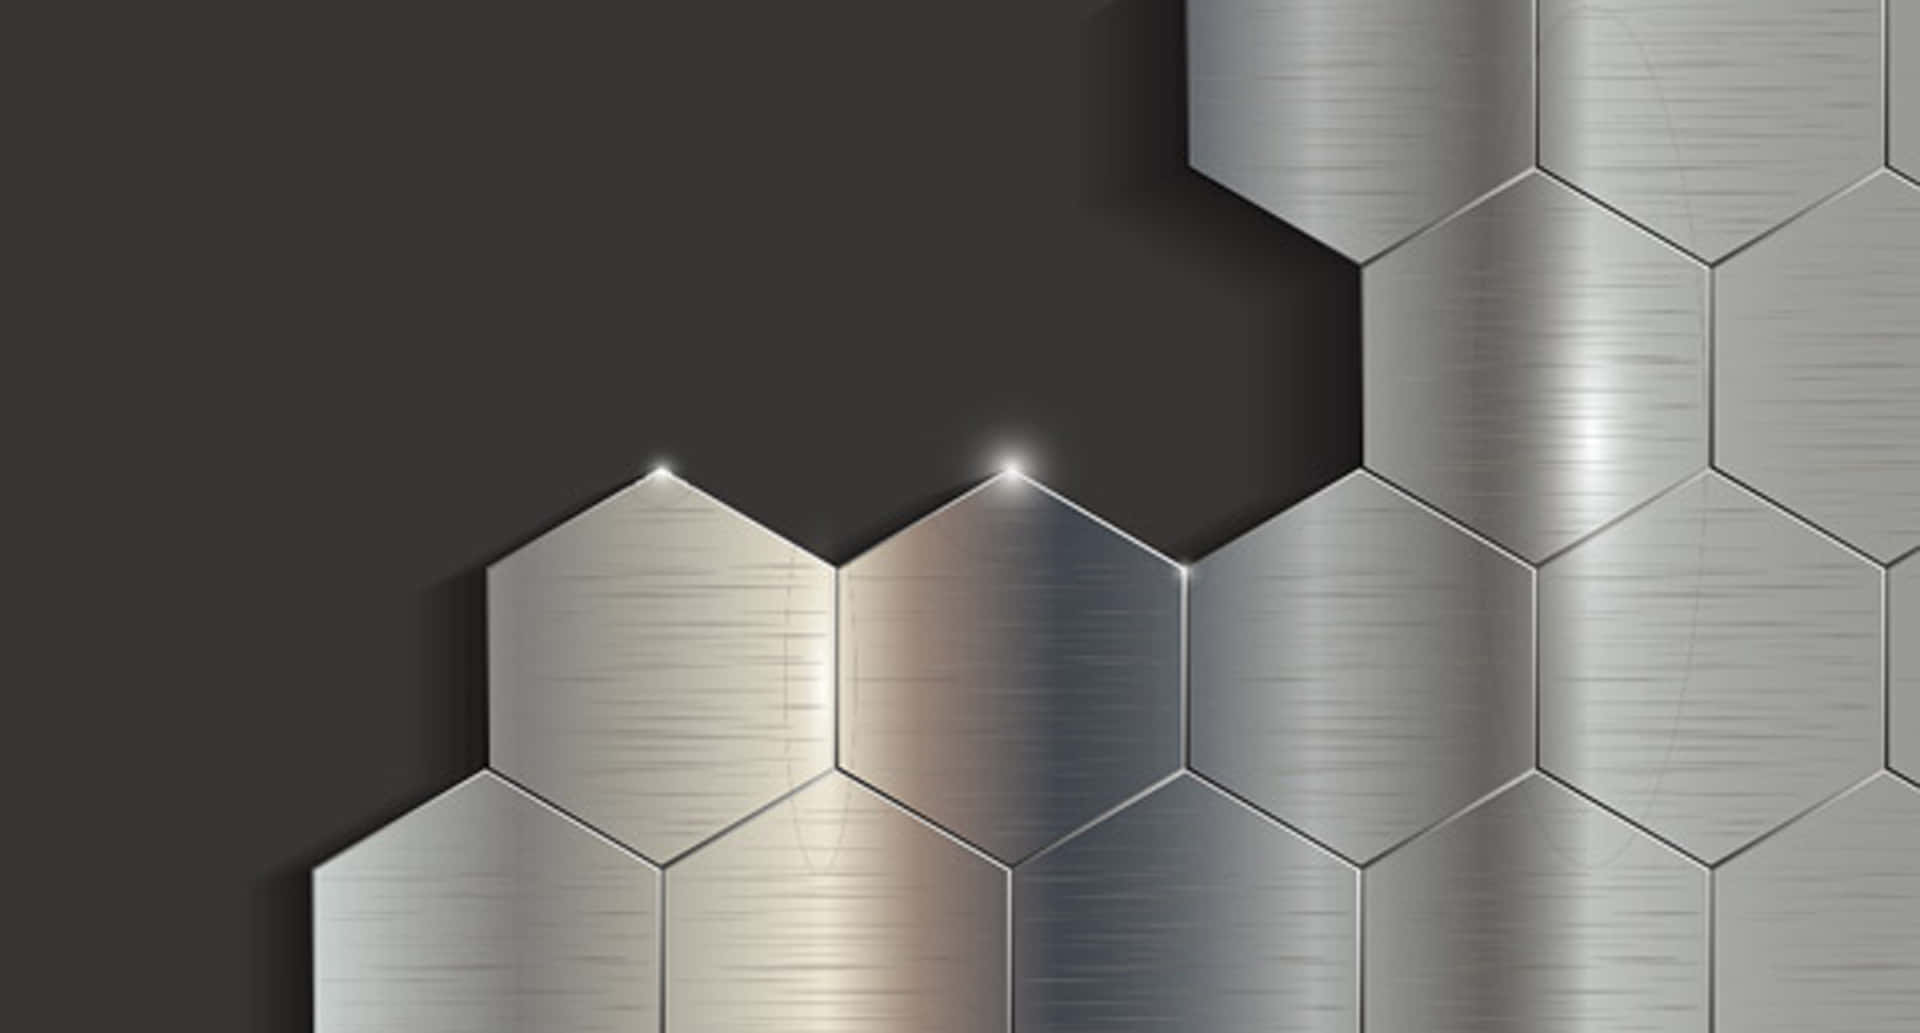 Metal Hexagonal Tiles On A Black Background